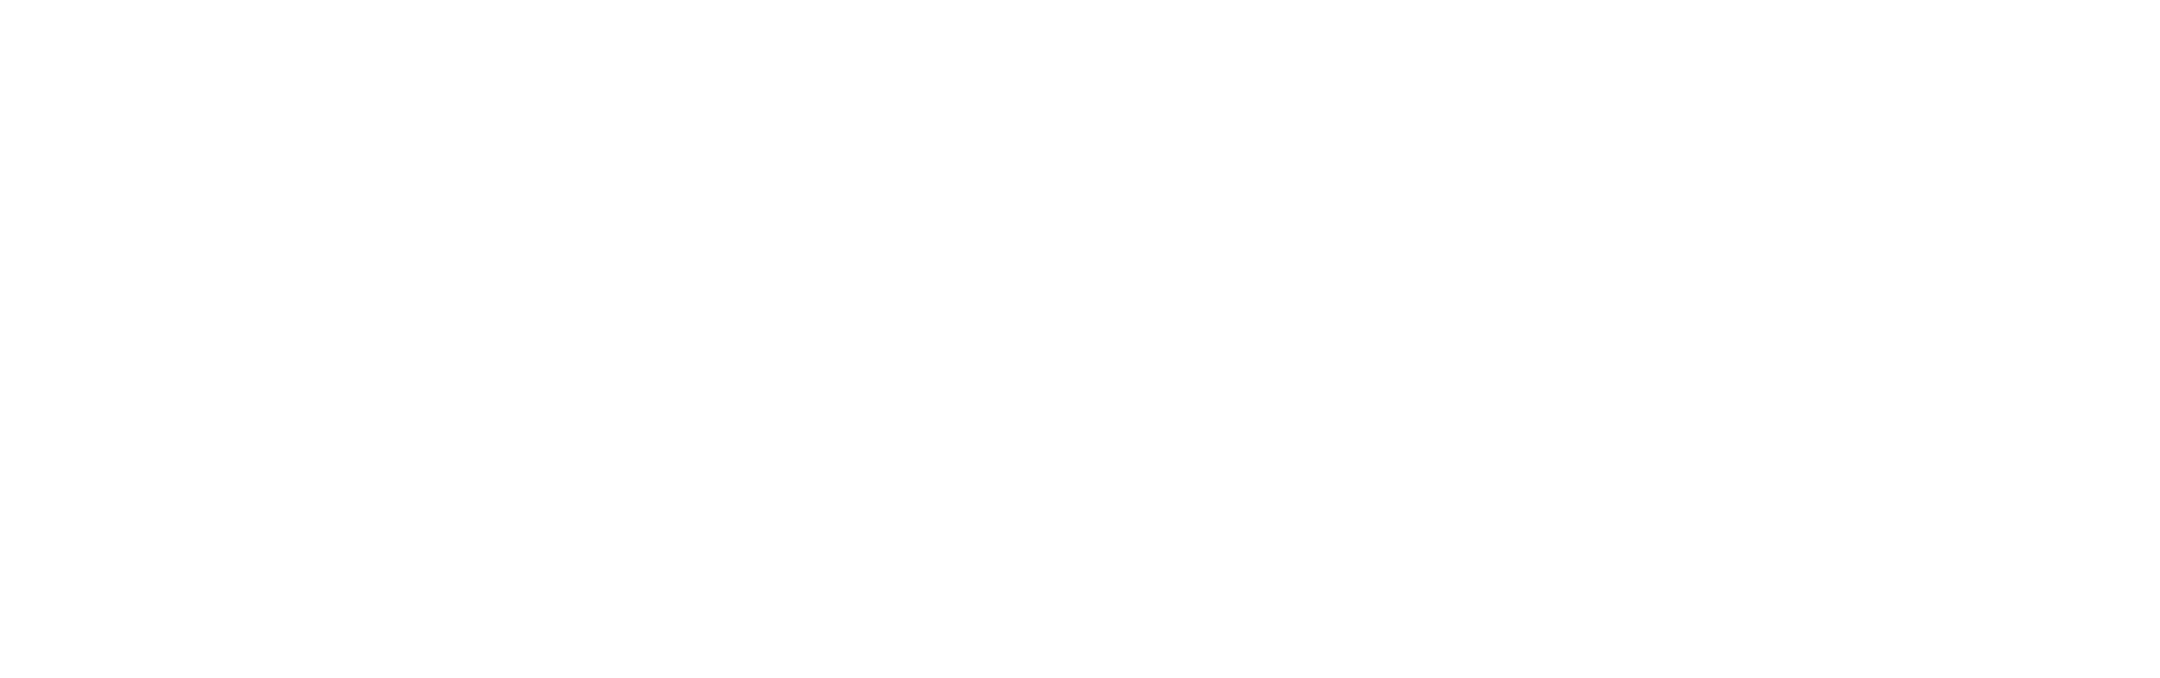 coca-cola-logosvg.png